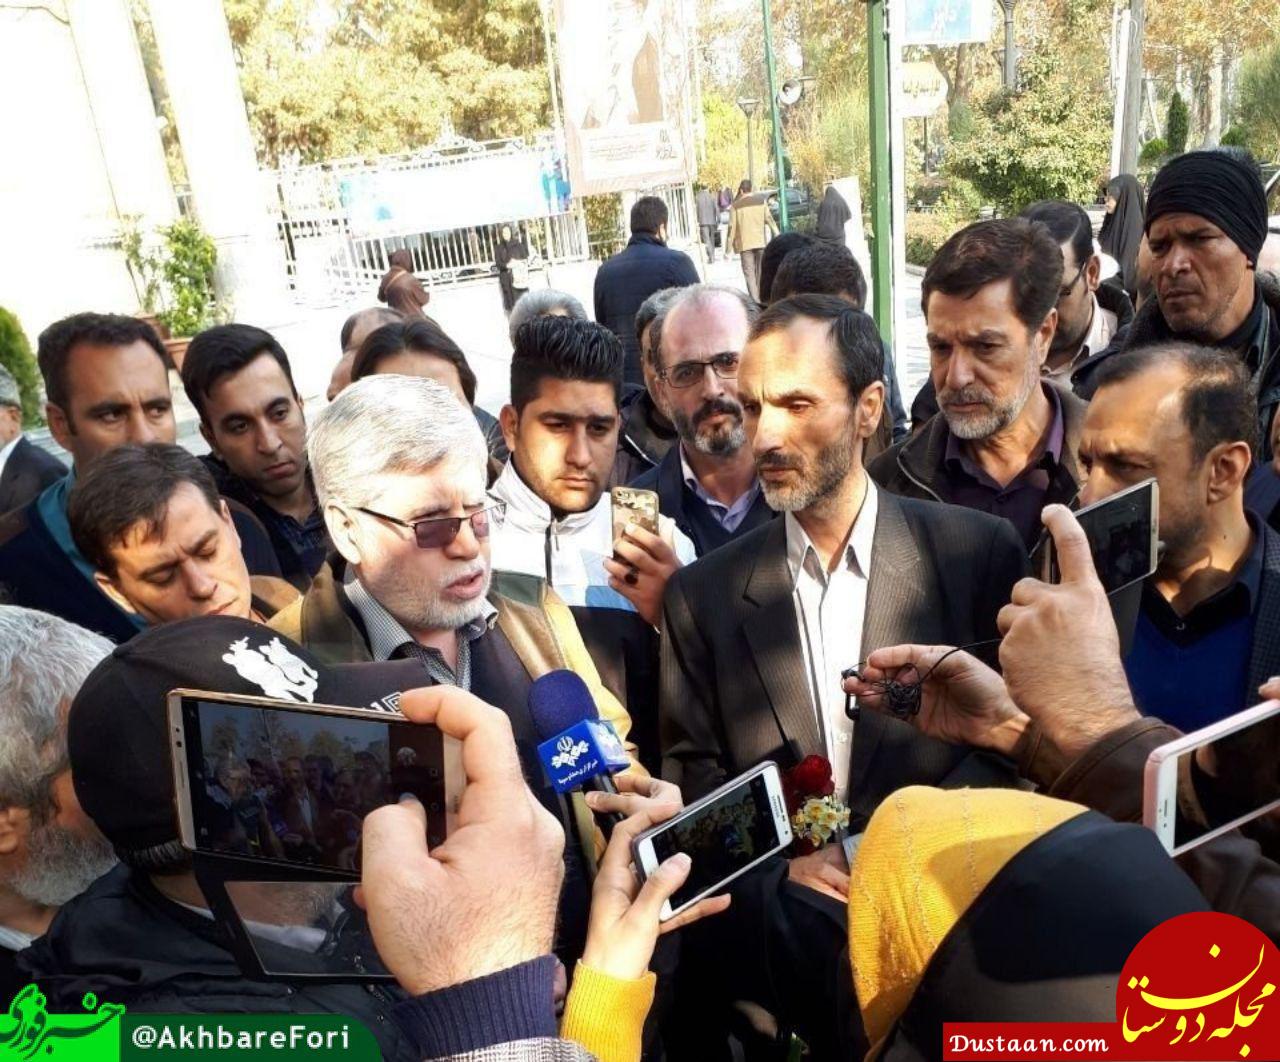 www.dustaan.com خروج بقایی و جوانفکر از دادسرای تهران، با گل رز و نرگس! +عکس